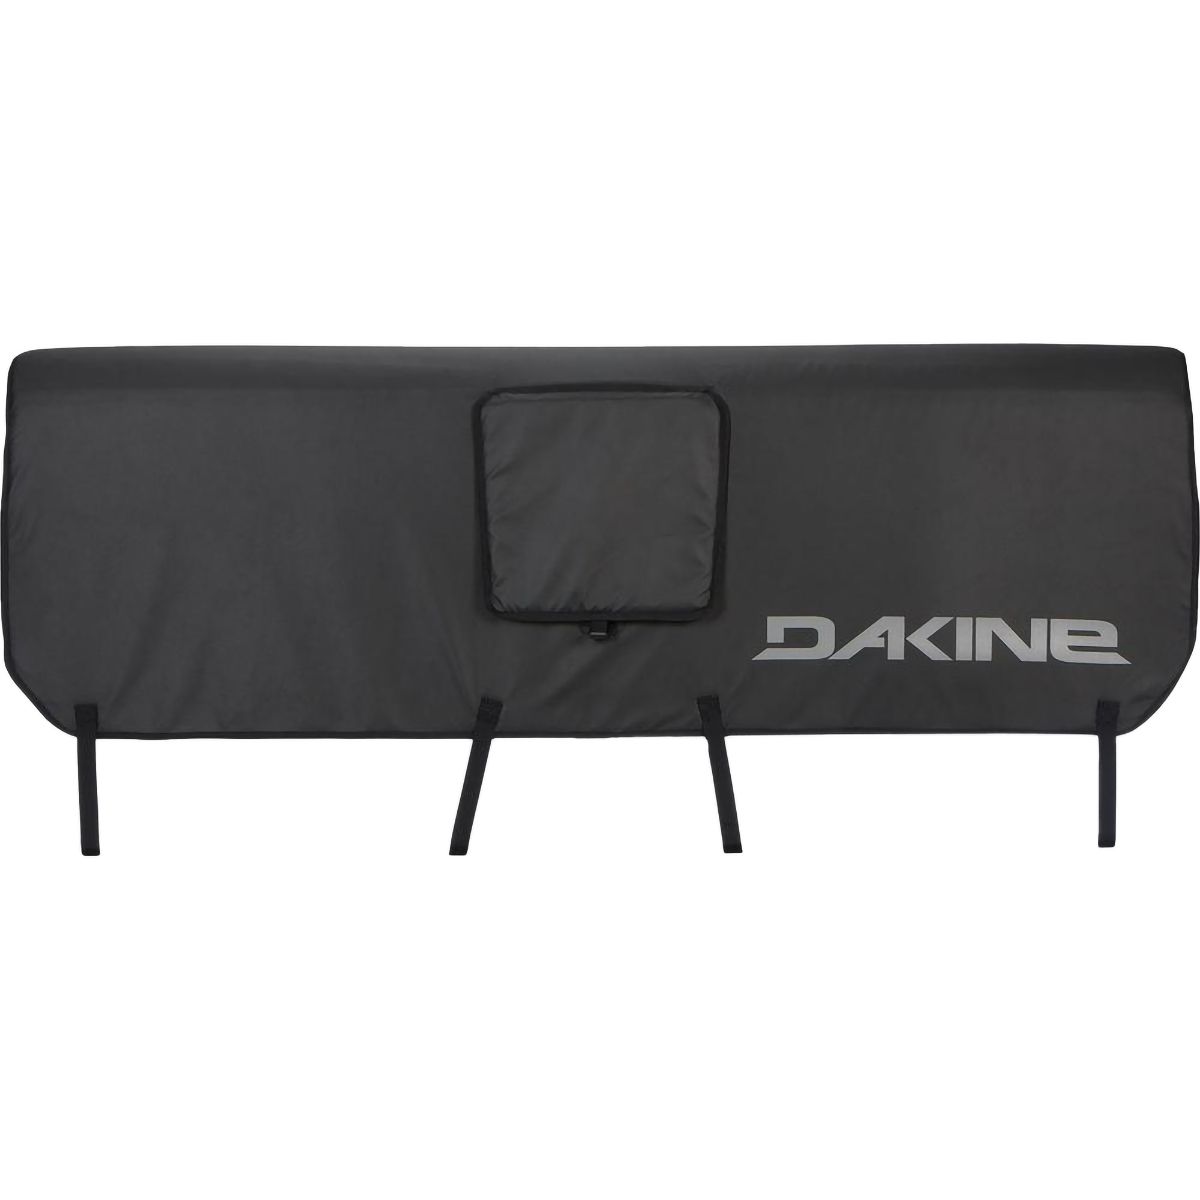 Dakine Pickup Pad DLX Black Large